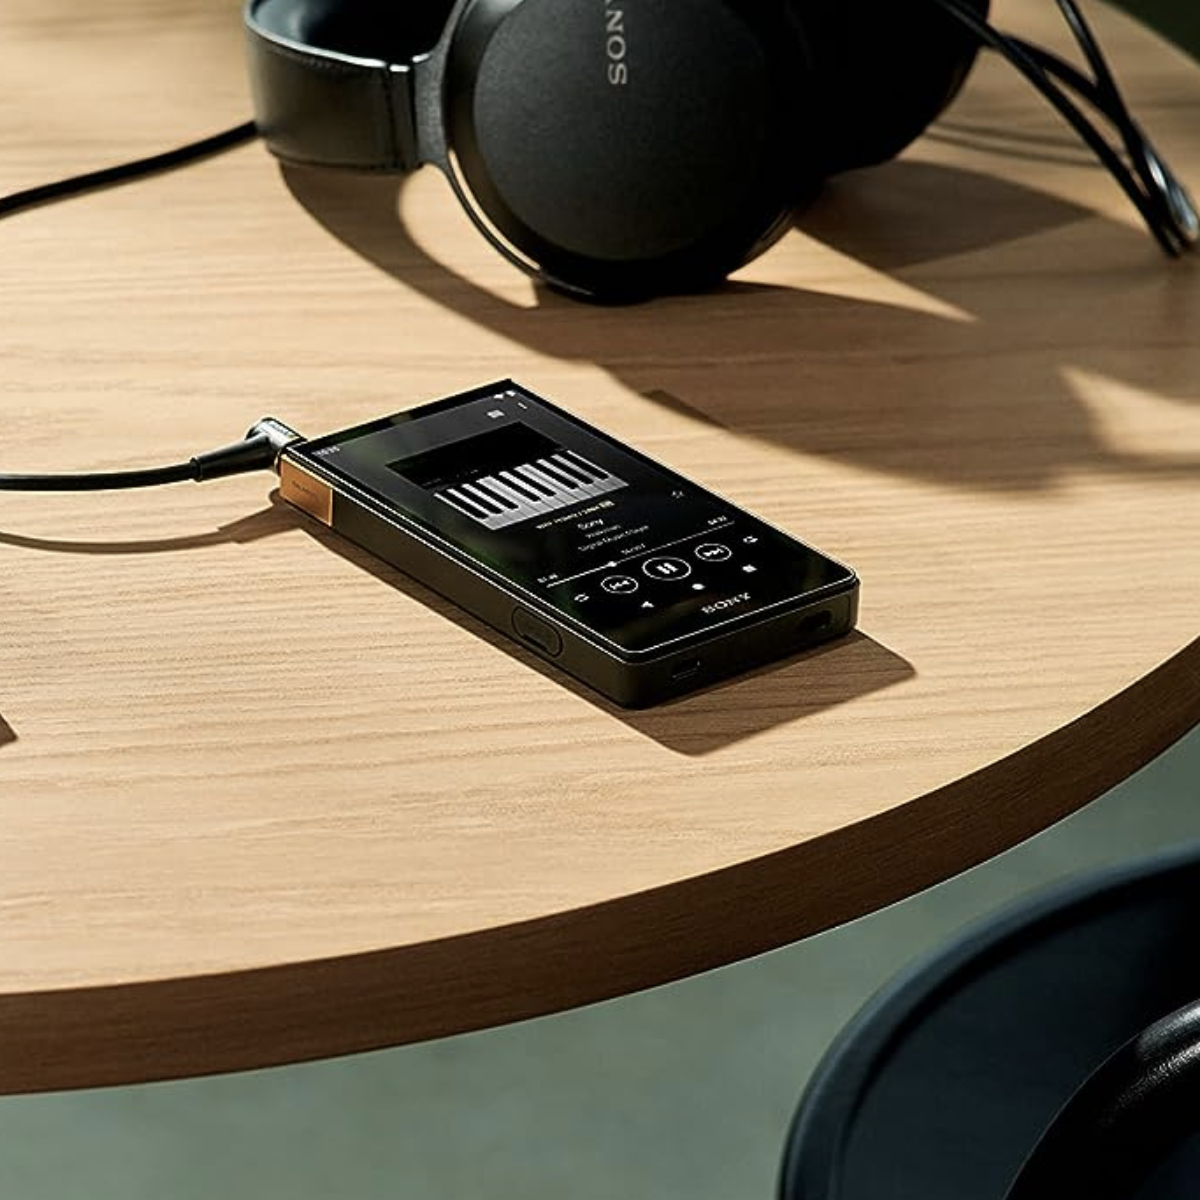 Sony NW-ZX707 Walkman Hi-Res Portable Digital Music Player